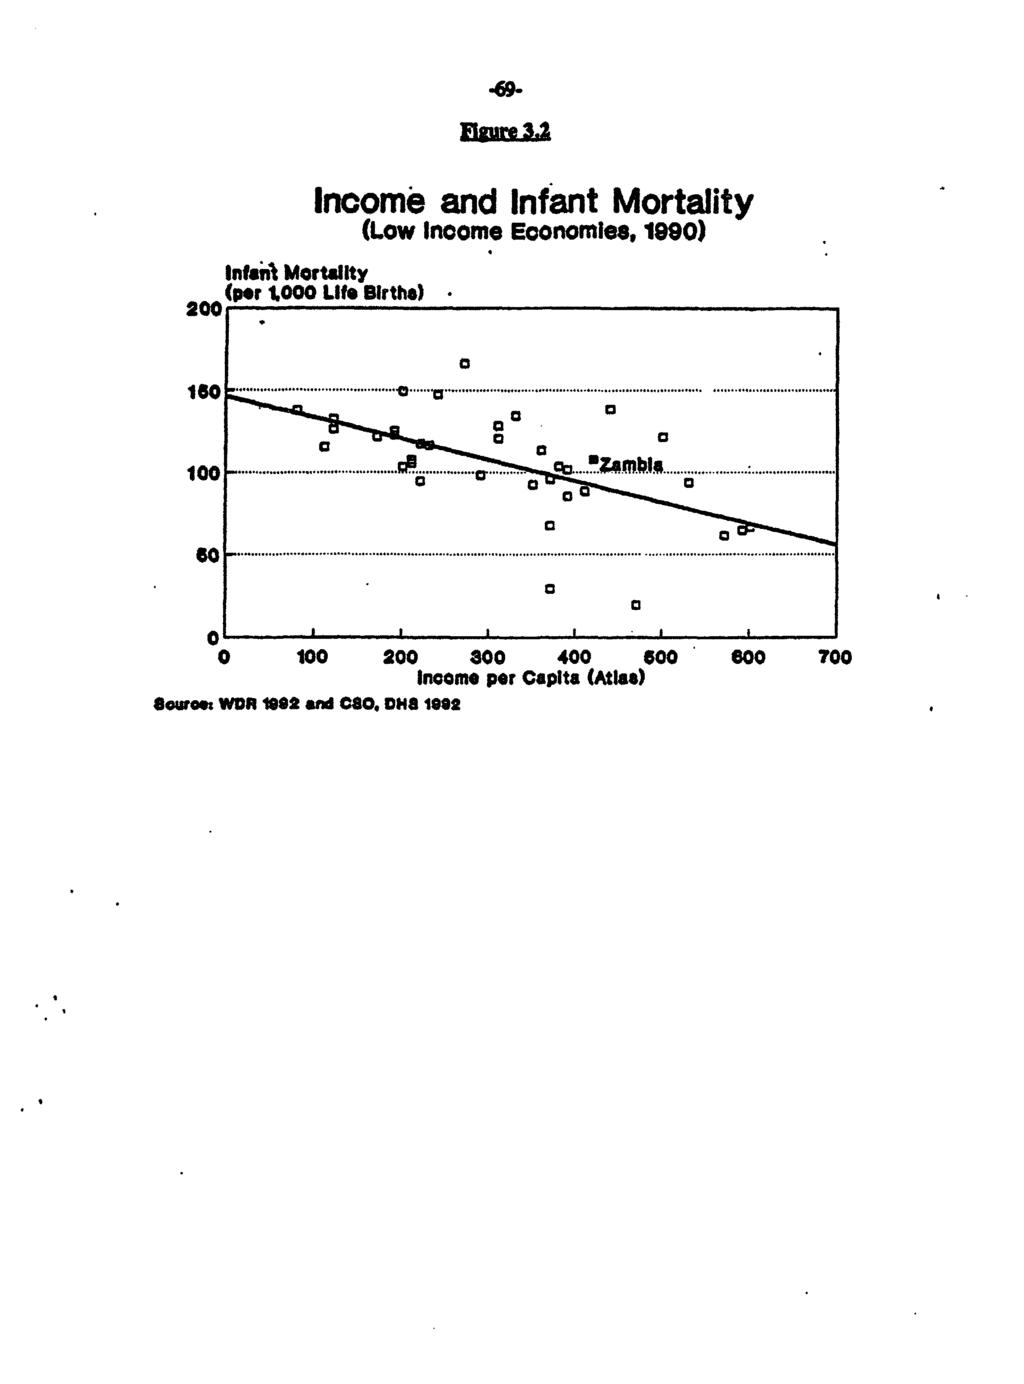 InMOiM Mortality 200(per 1,000 Life Births) Income and Infant Mortality (Low Inoome Economies, 190) IS_ C 'l... " Il"4@ '''"' llill X...a... - -* 0 ----------------.